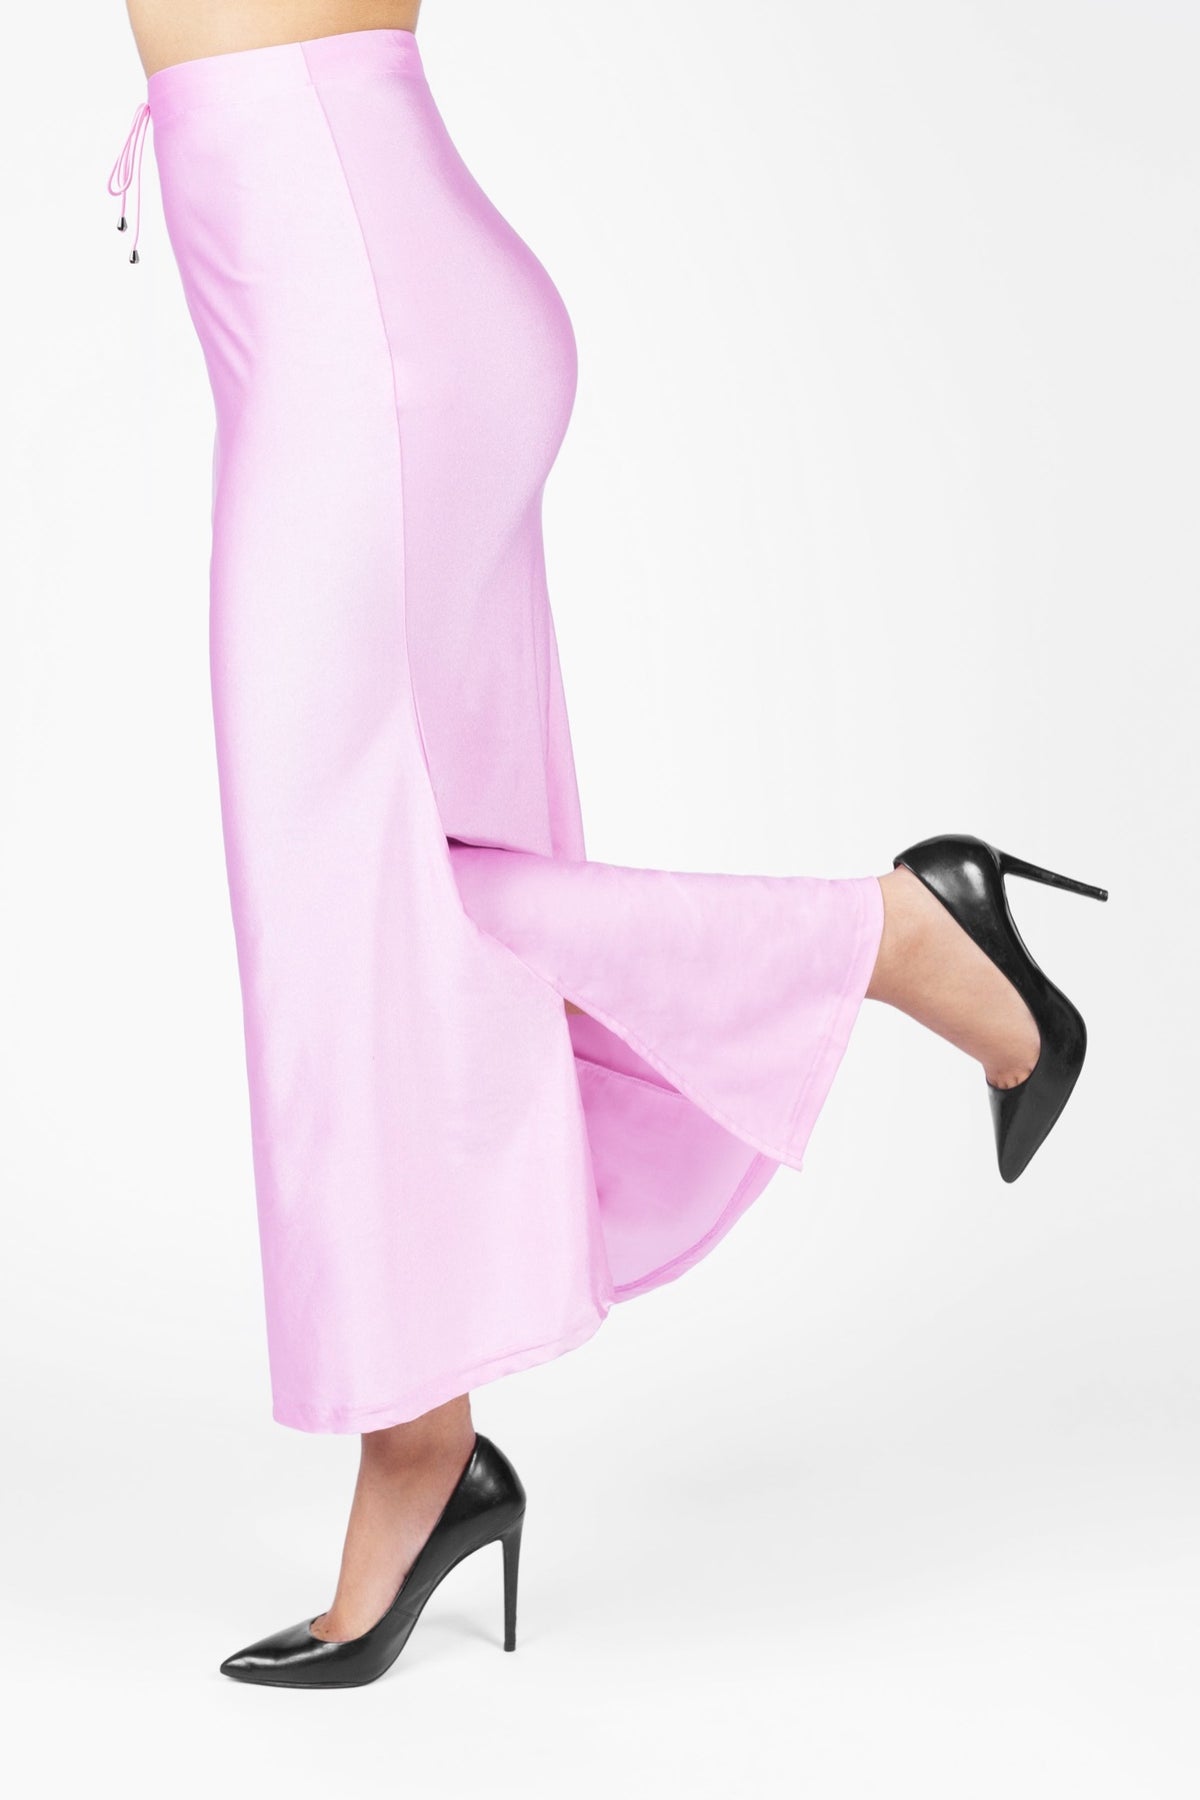 Buy Leriya Fashion Microfiber Saree Shapewear Petticoat for Women, Cotton  Blended Shape Wear for Saree (White_Large) (Medium, Pink) at